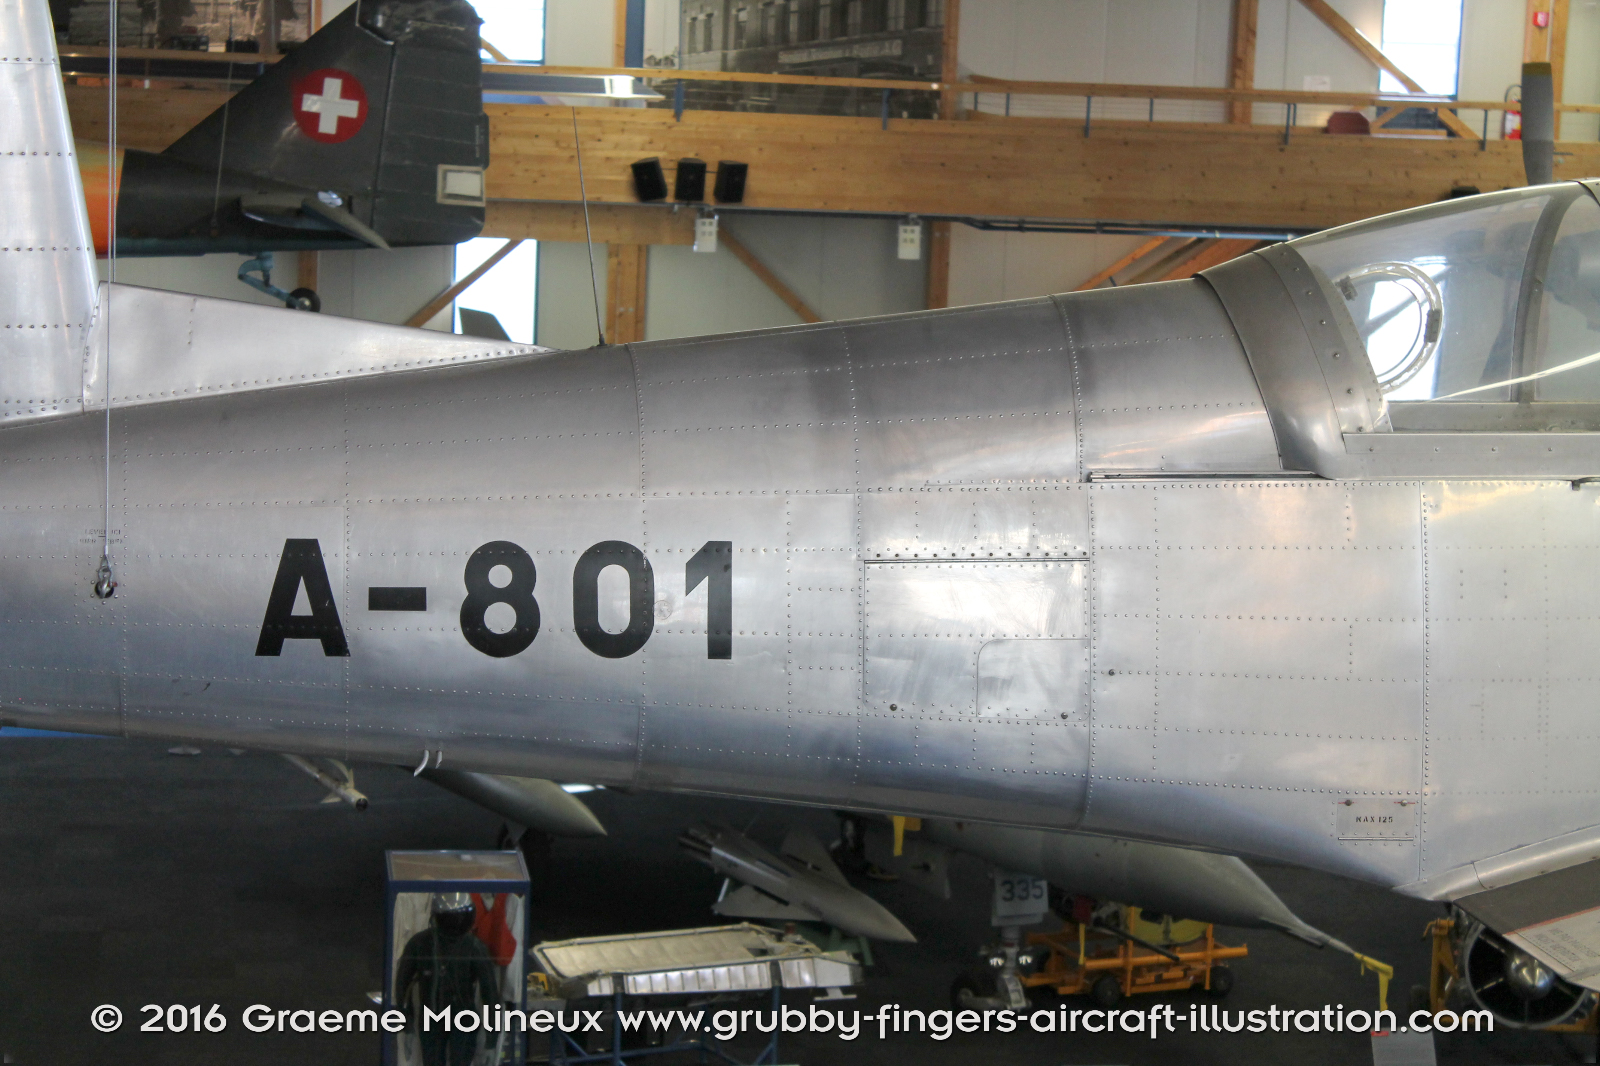 PILATUS_P-2_A-801_Swiss_Air_Force_Museum_2015_09_GrubbyFingers